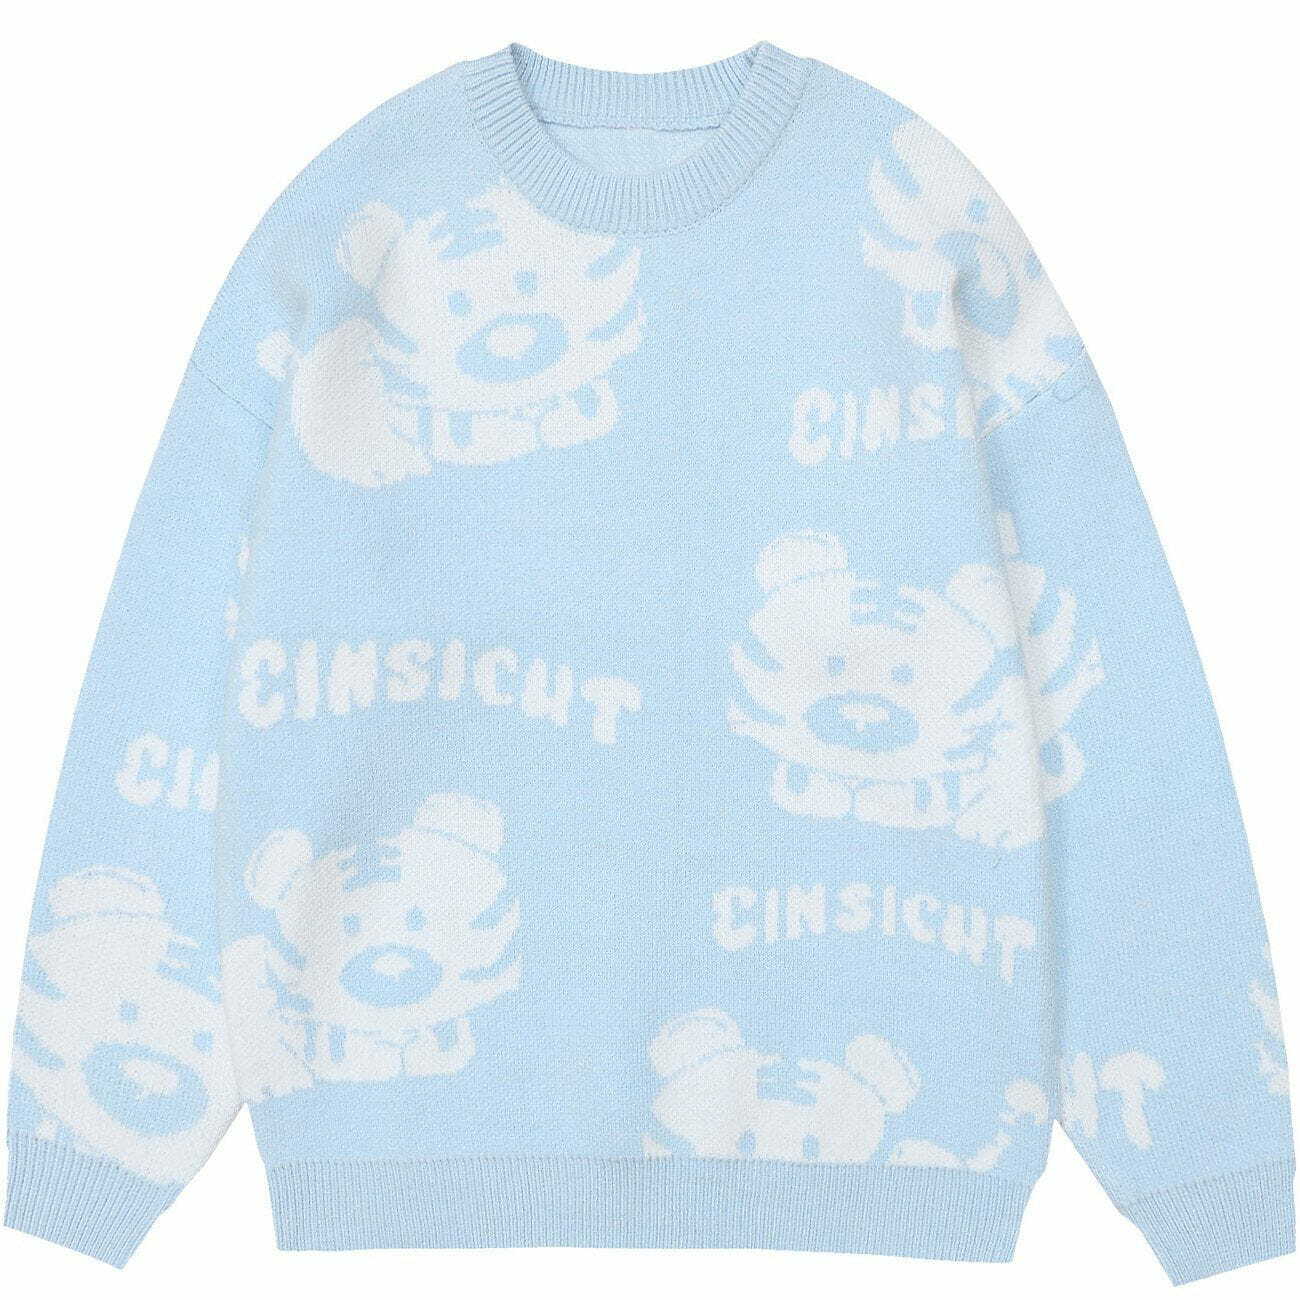 tiger print knit sweater cute & youthful streetwear 8063